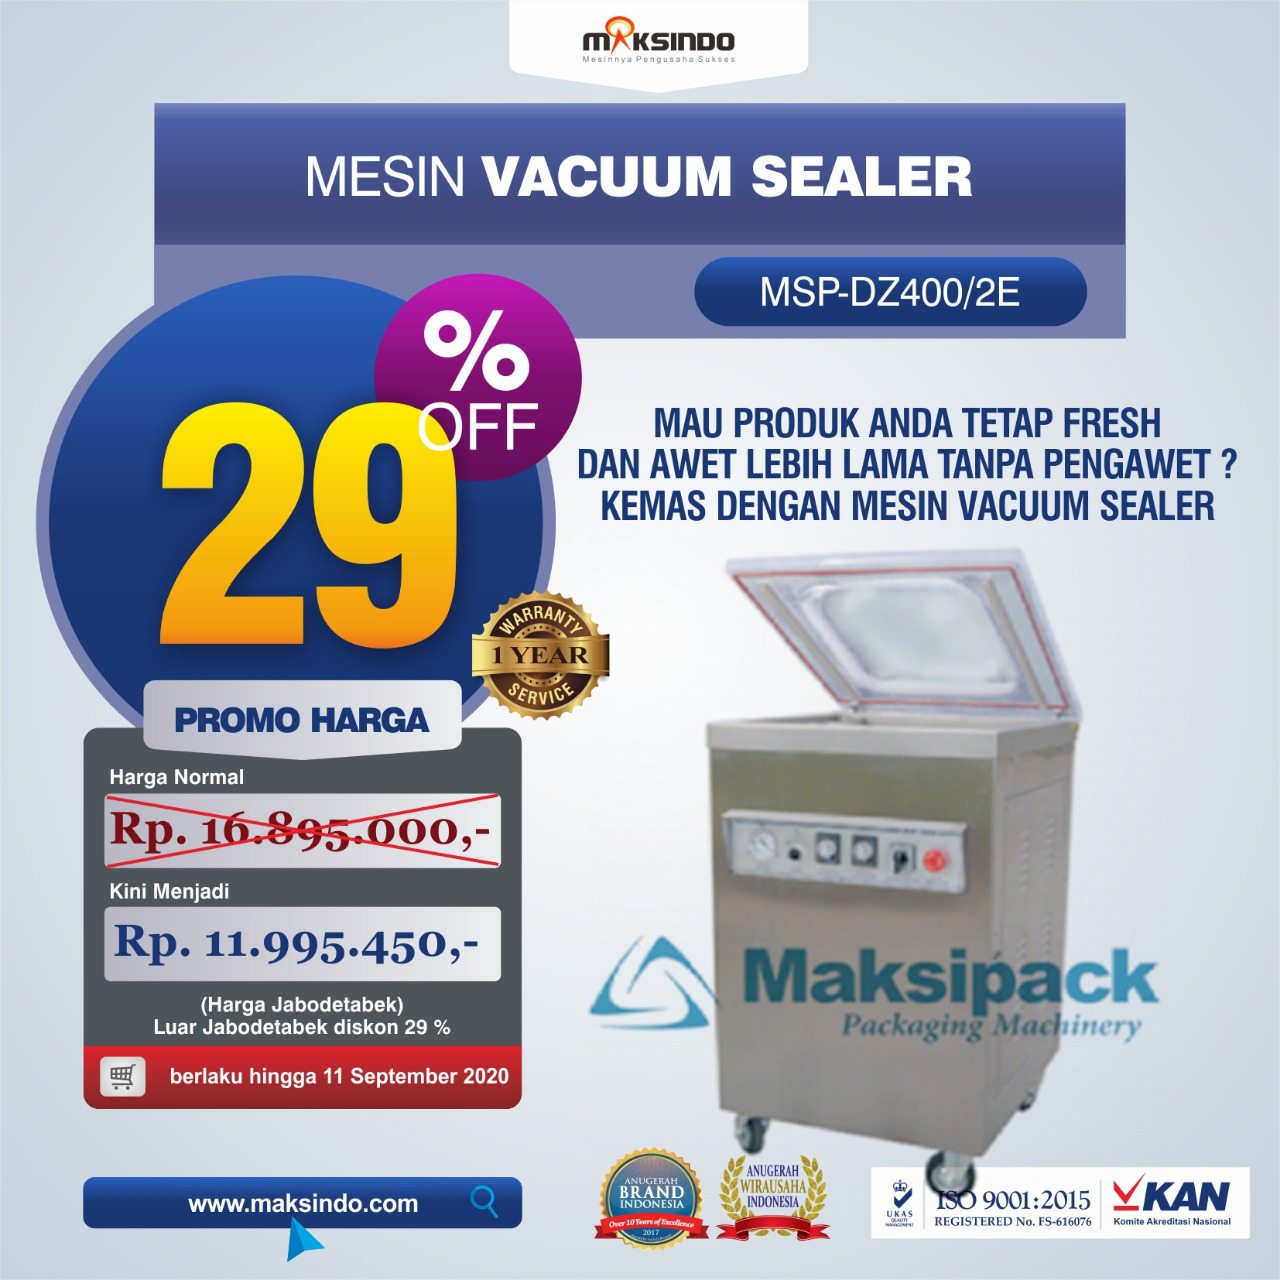 Jual Mesin Vacuum Sealer (MSP-DZ400/2E) di Bekasi